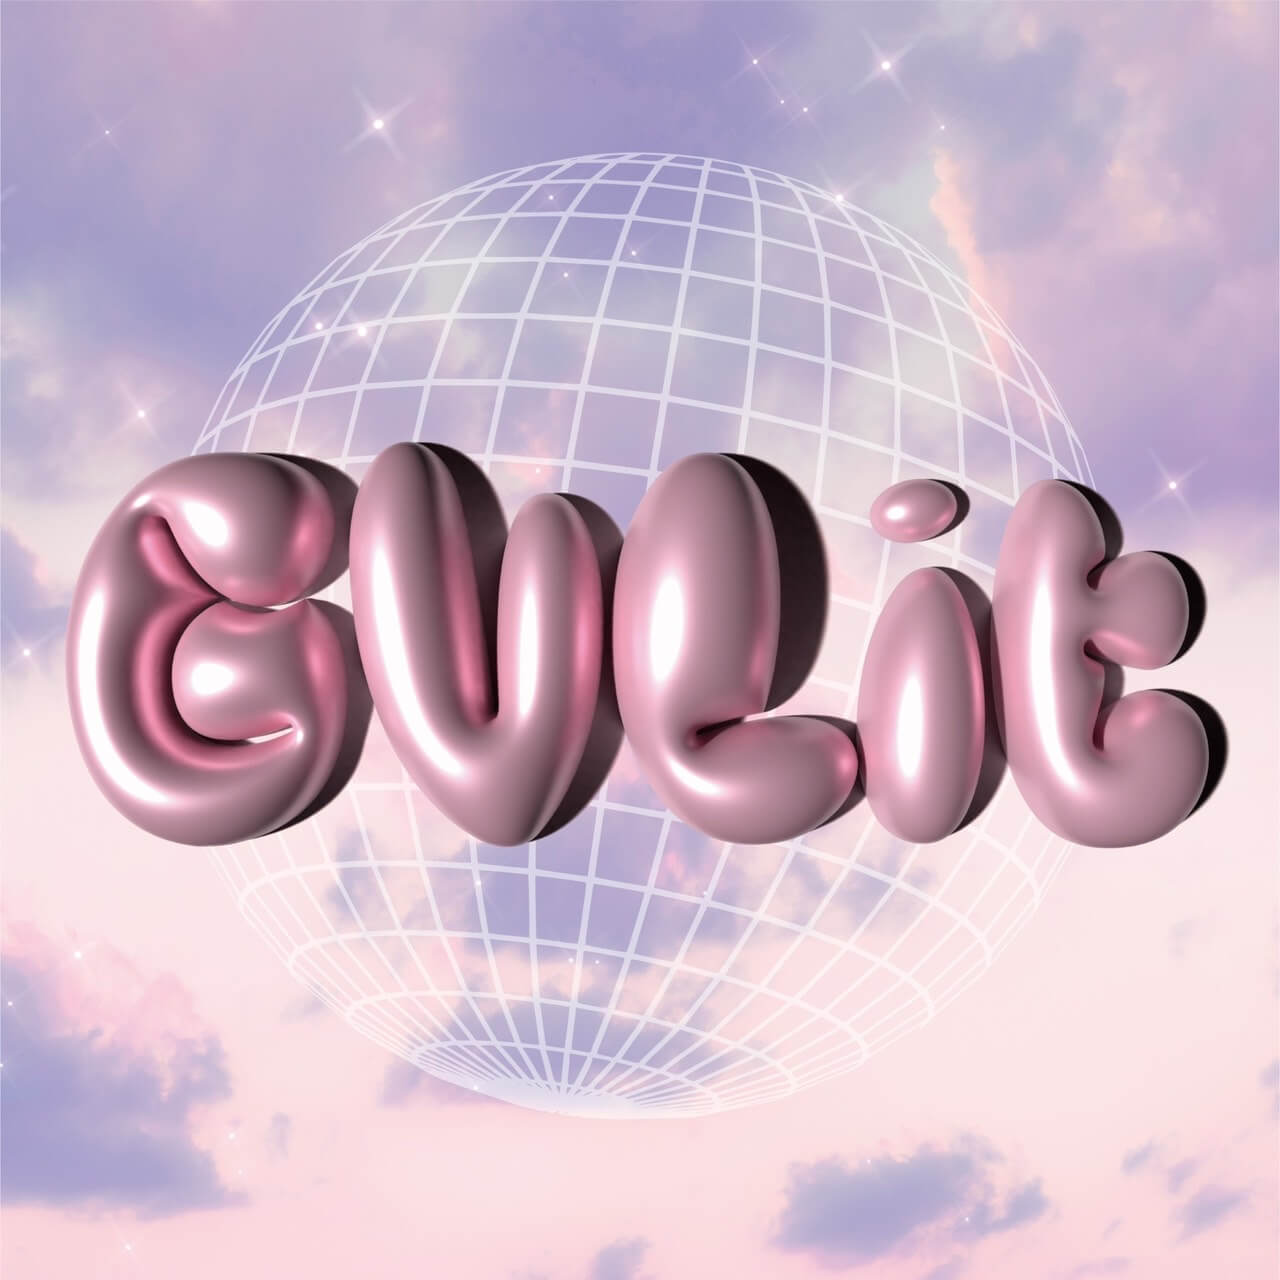 HIPHOPグループ「GVLit」ギャリット　オーディション